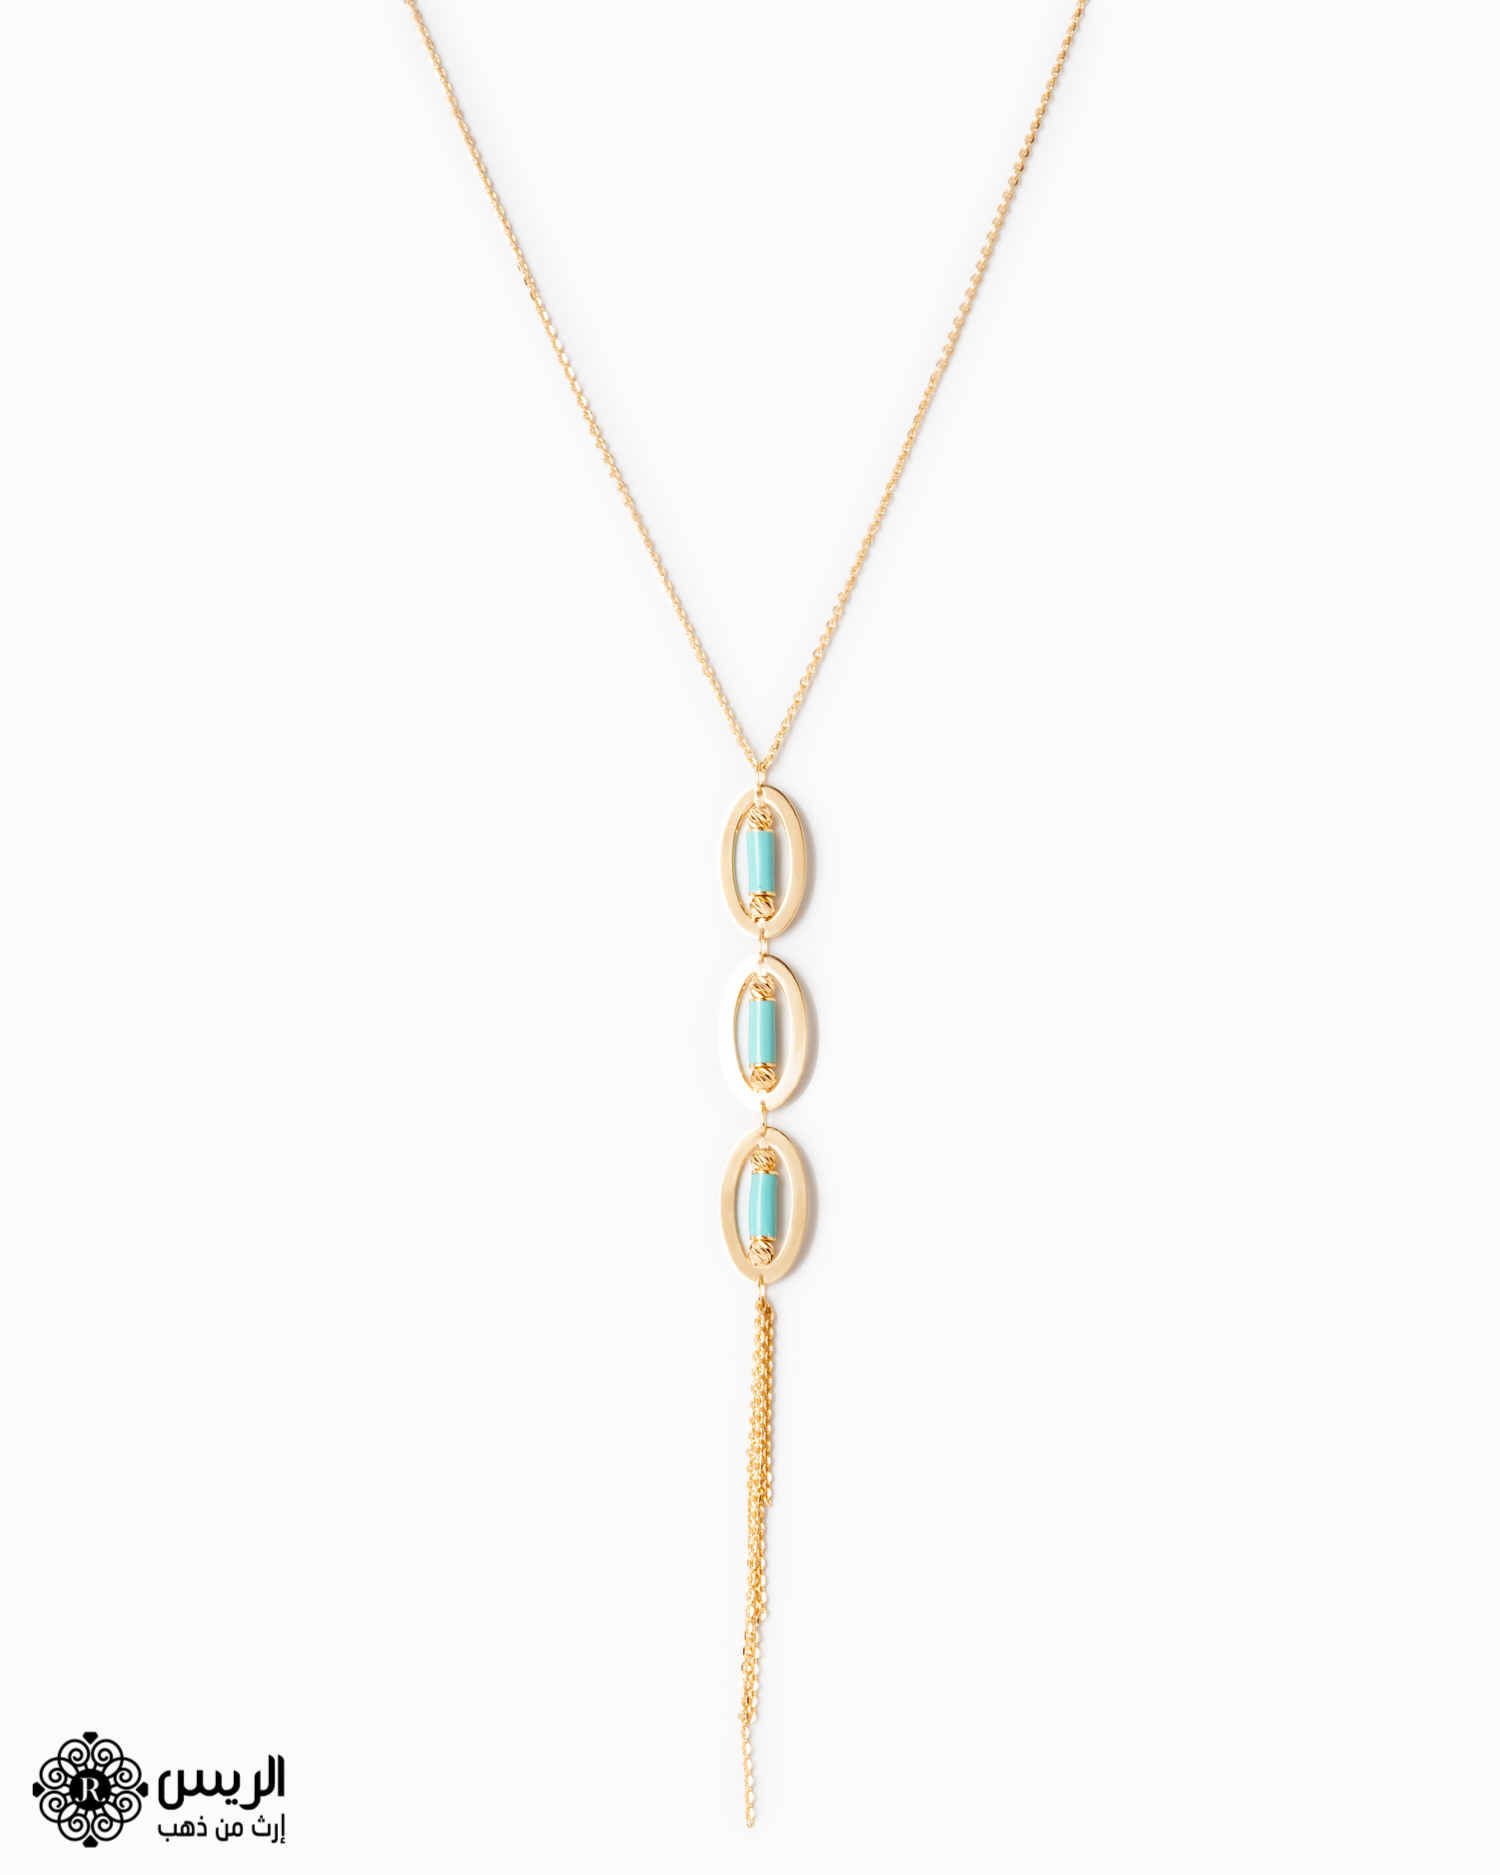 Raies jewelry Pendant with Elegant Chain تعليقة مع سلسله ناعمة الريس للمجوهرات